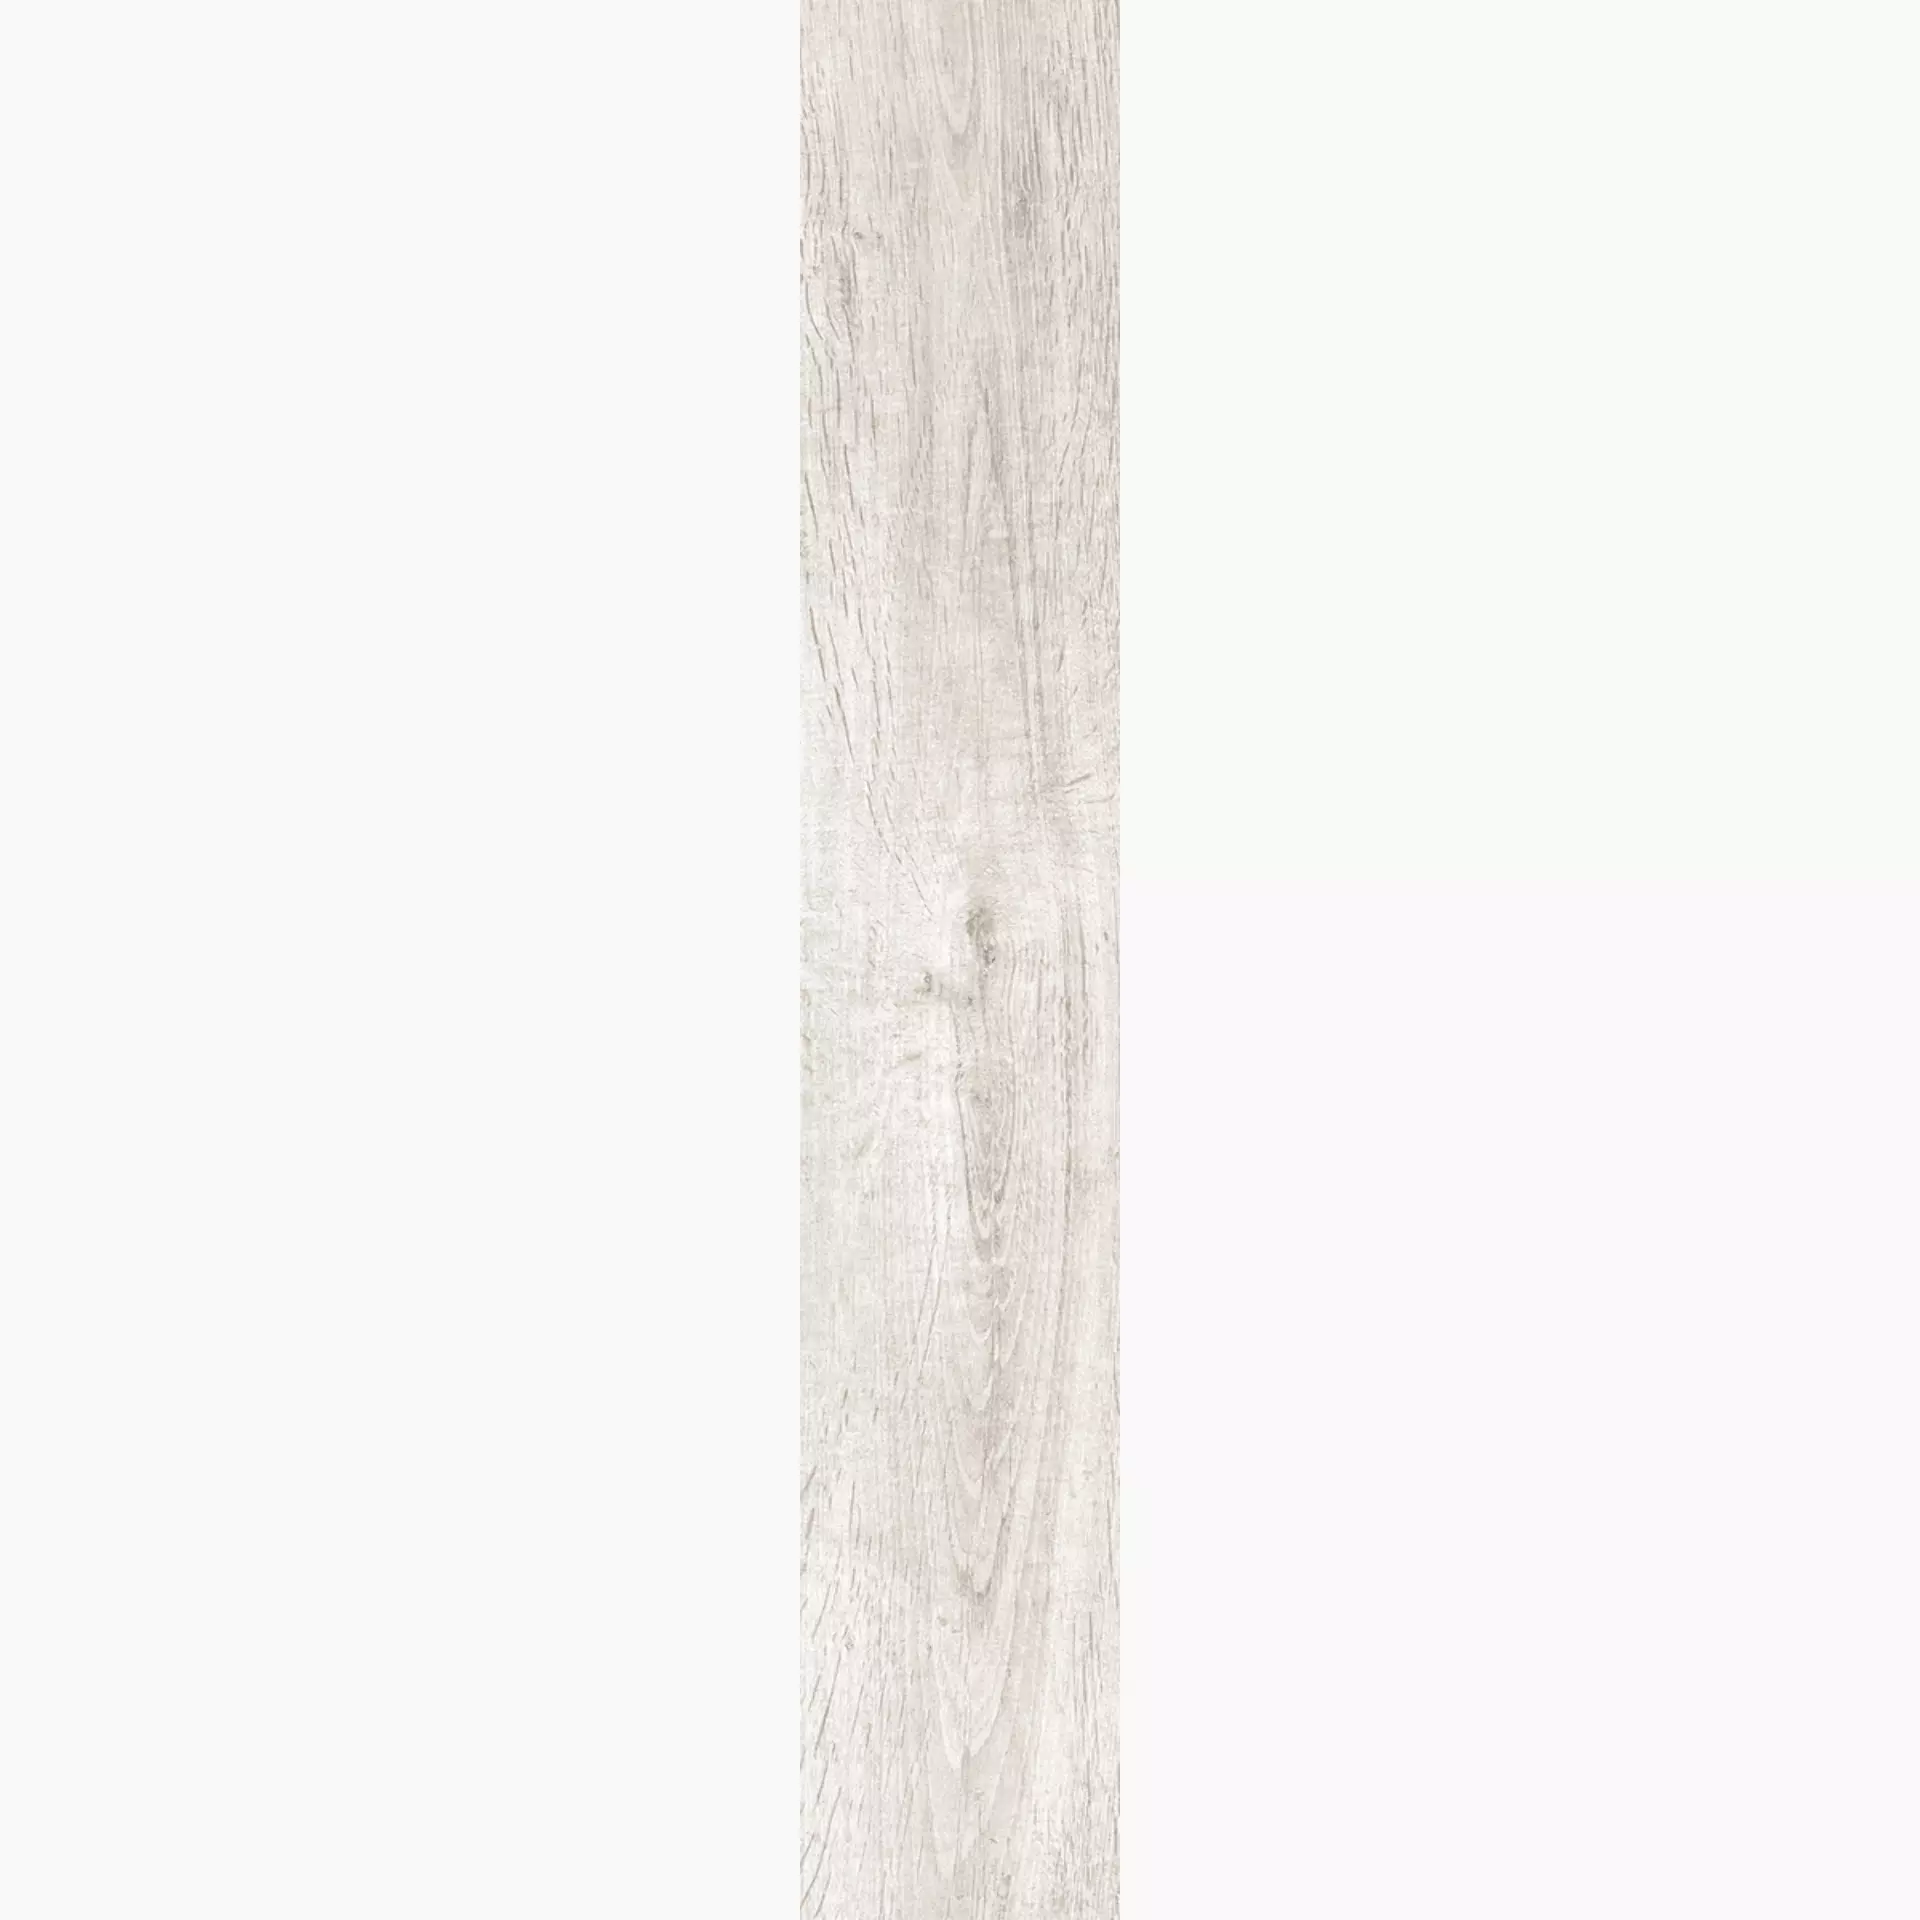 Rondine Greenwood Bianco Naturale J86460 7,5x45cm 9,5mm